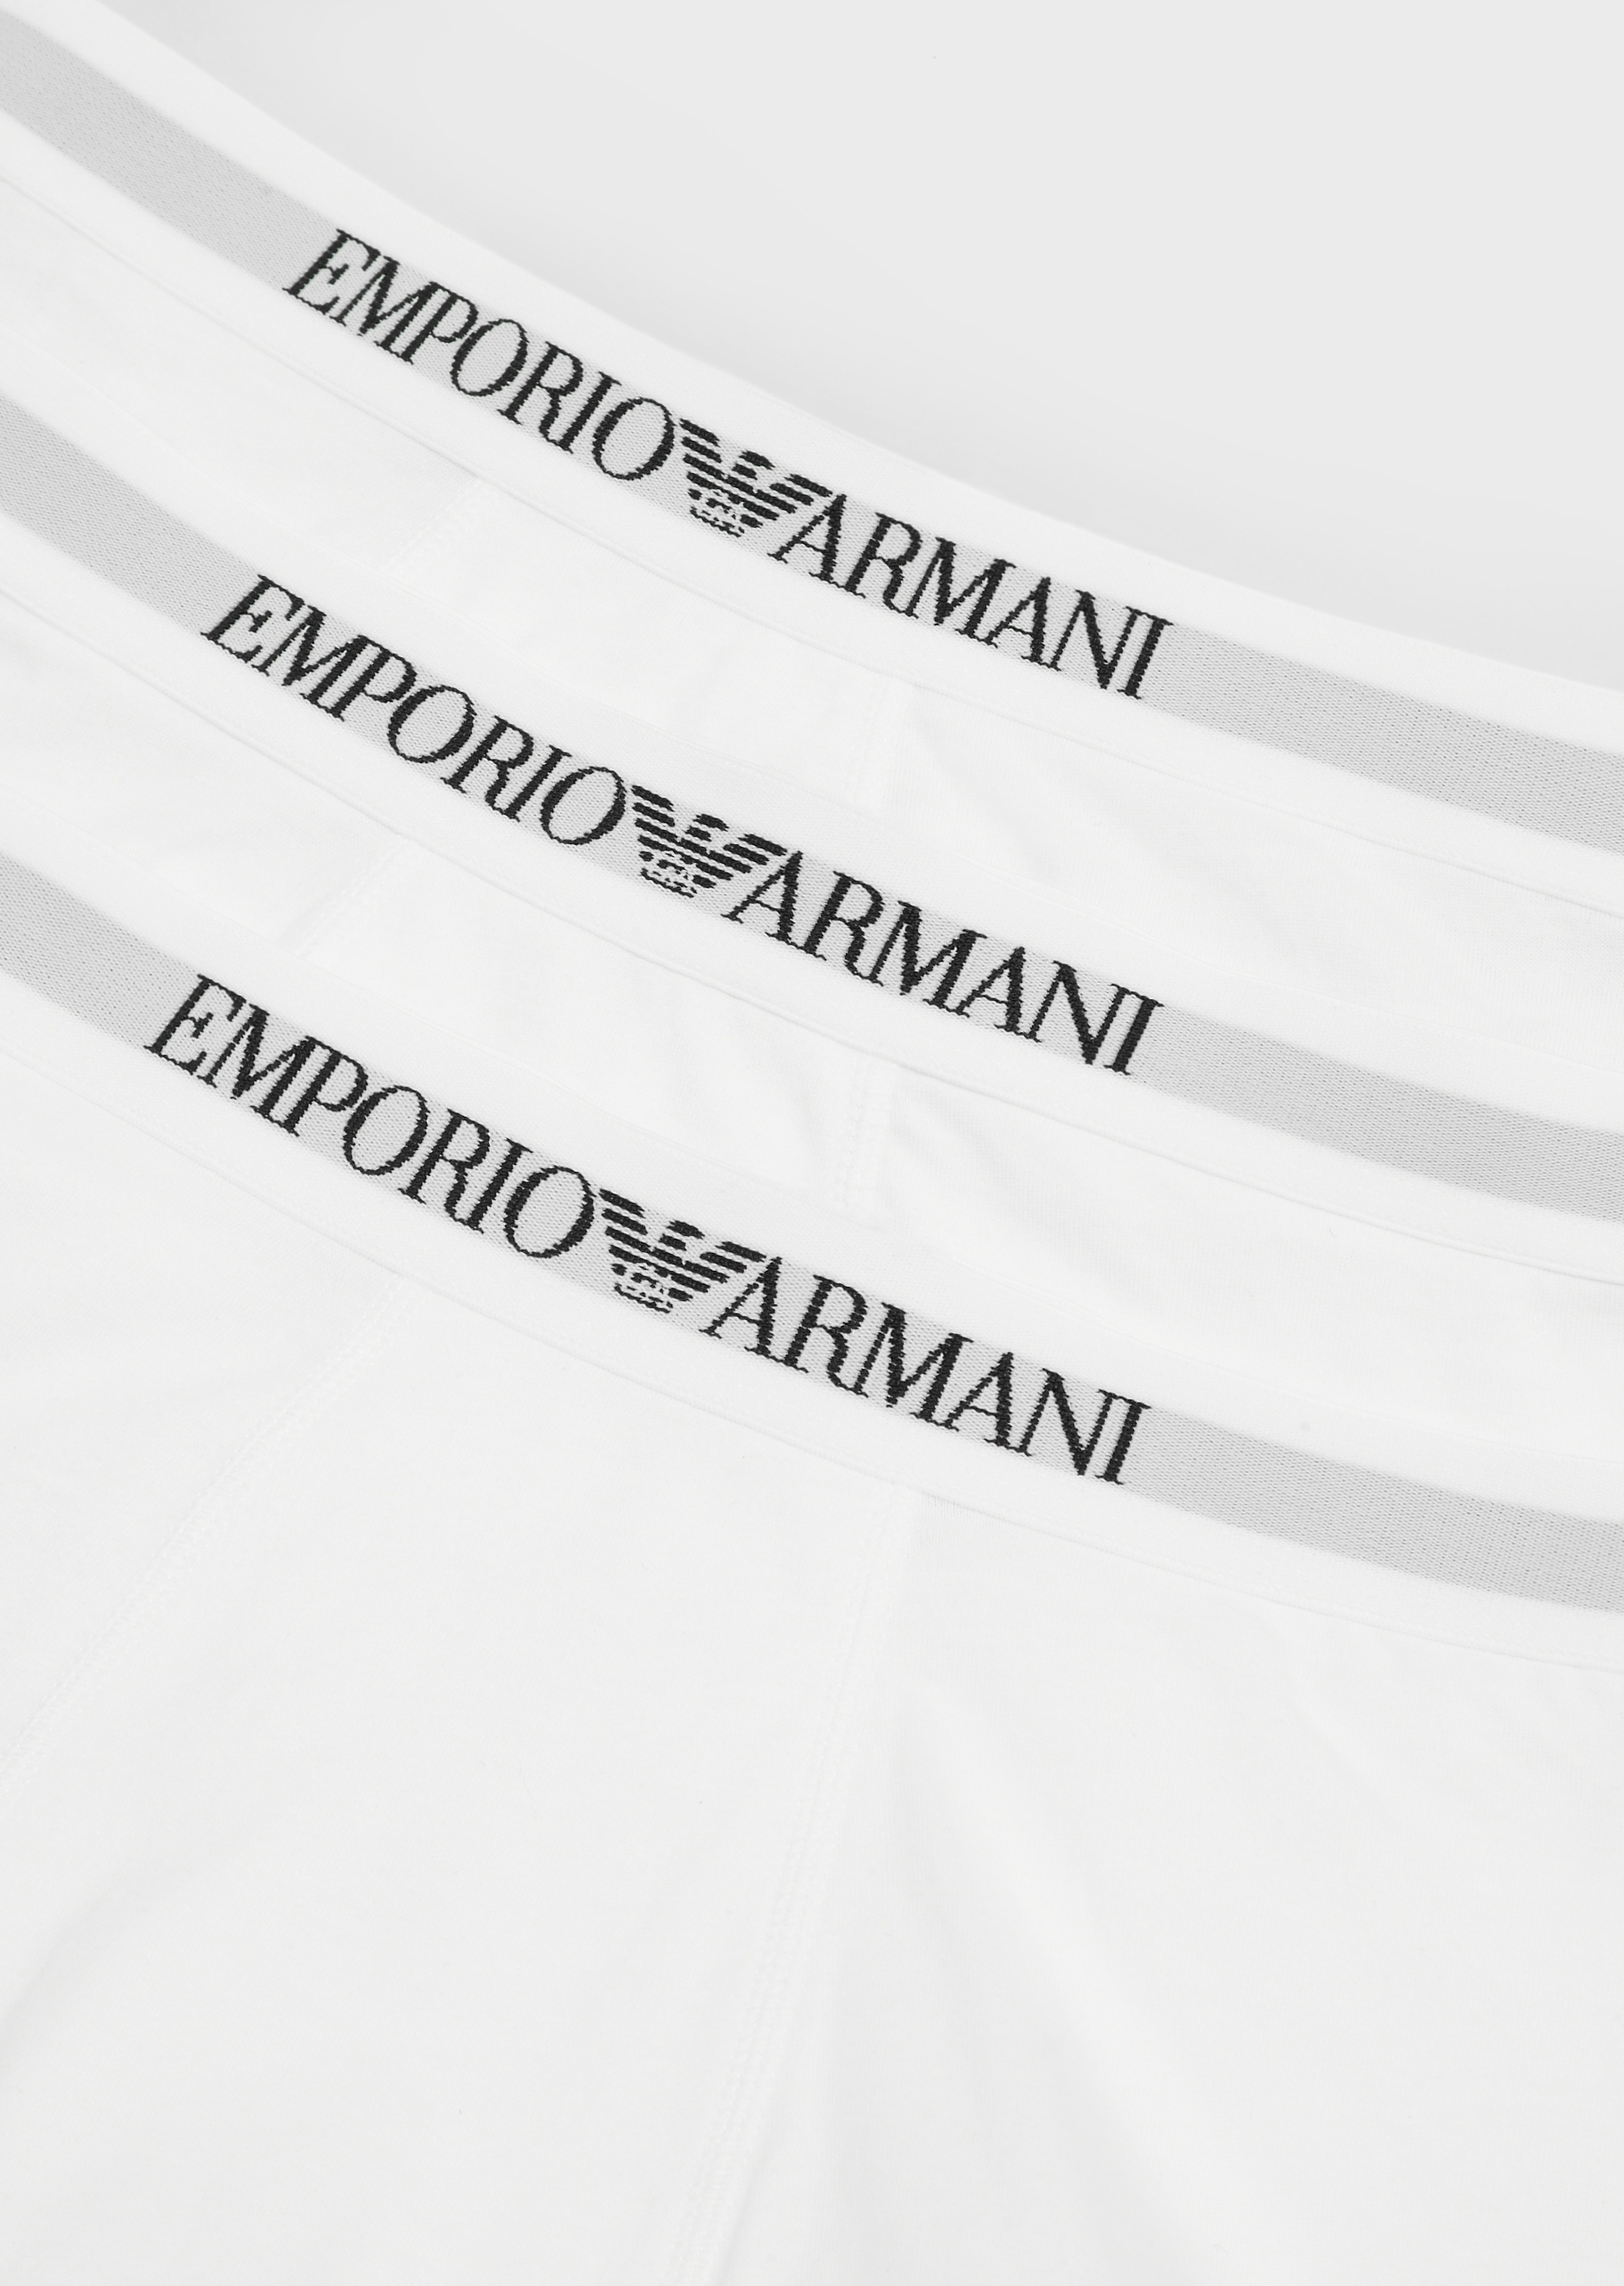 Emporio Armani 平角内裤三条装